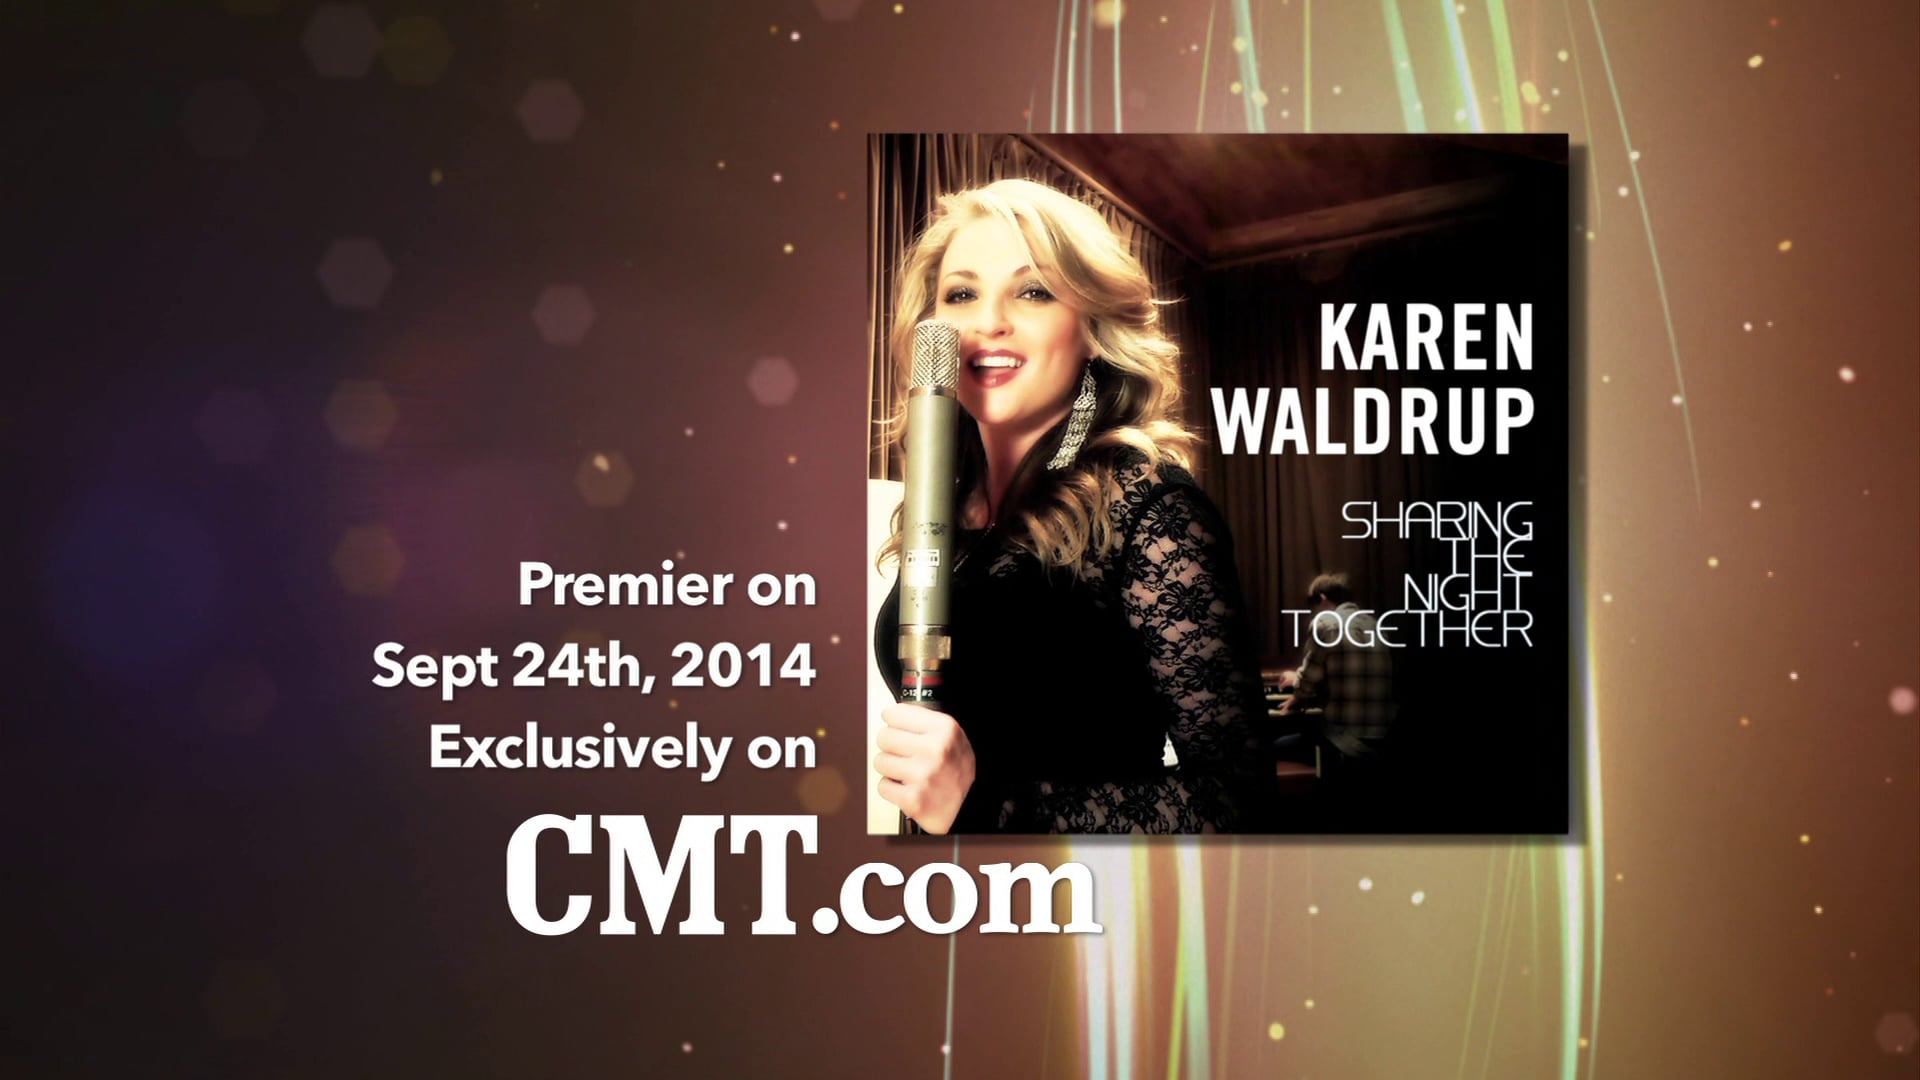 Karen Waldrup PROMO World Premiere "Sharing The Night